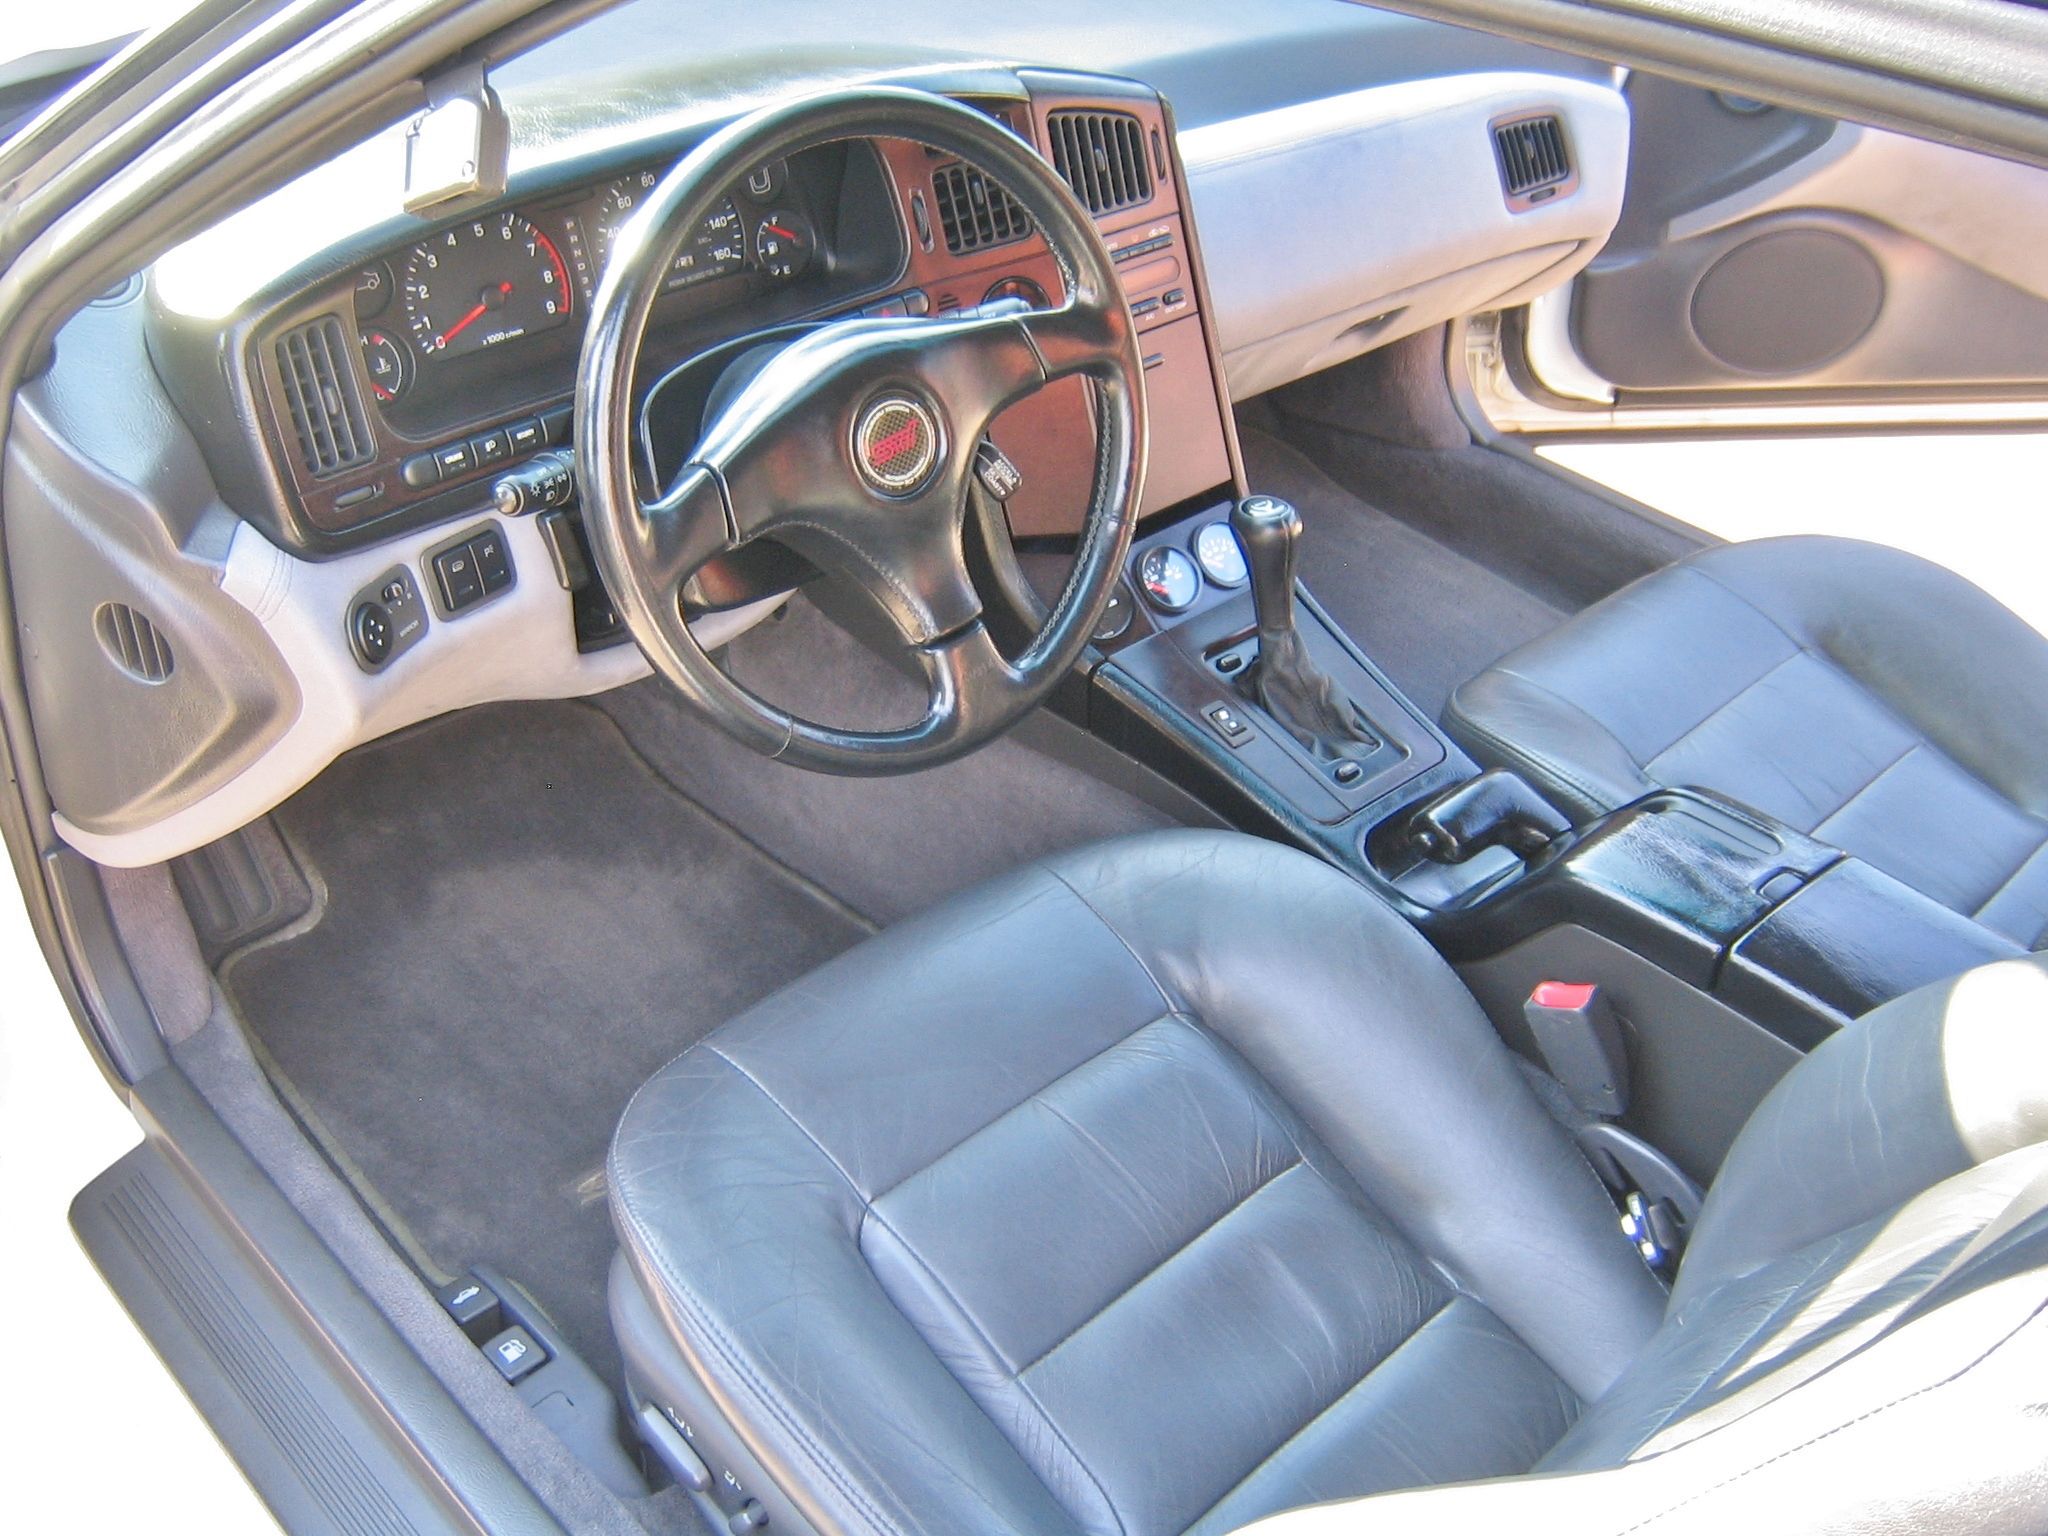 Subaru SVX interior